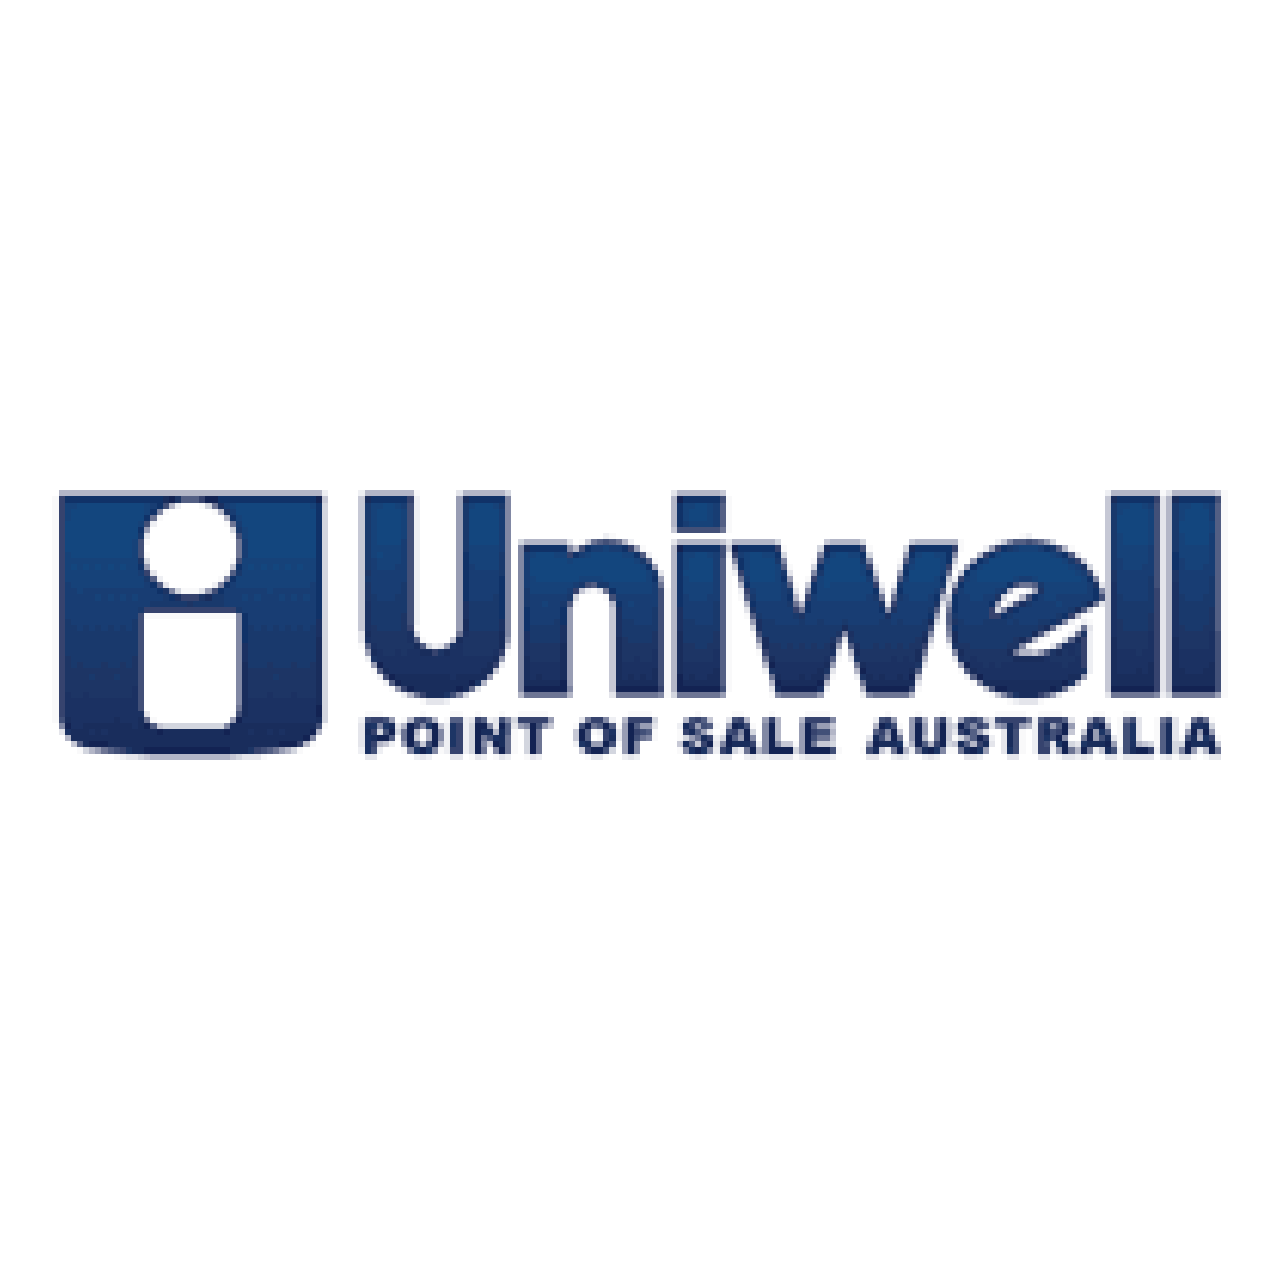 Uniwell logo